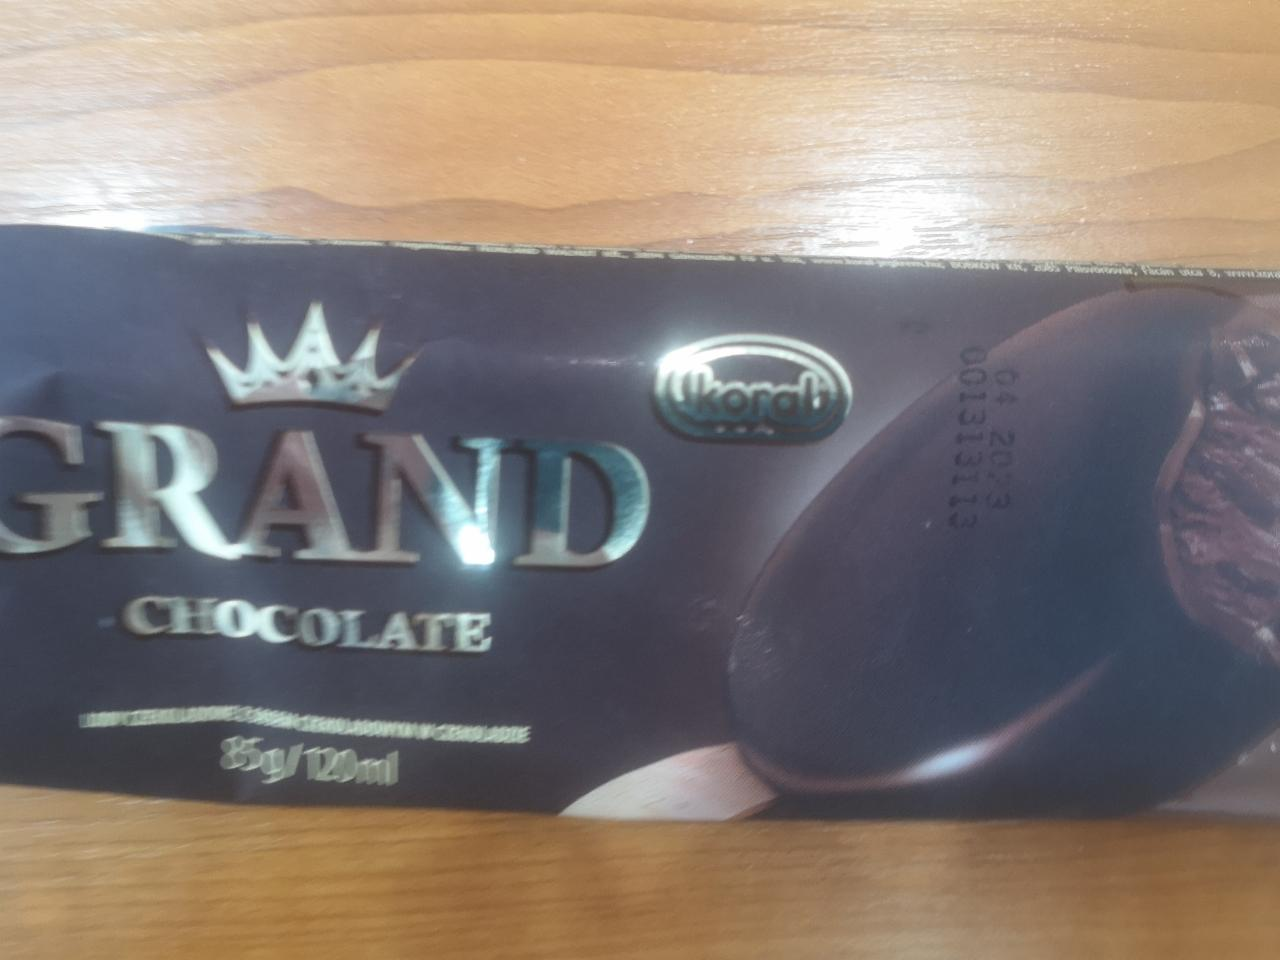 Fotografie - Grand chocolate Koral